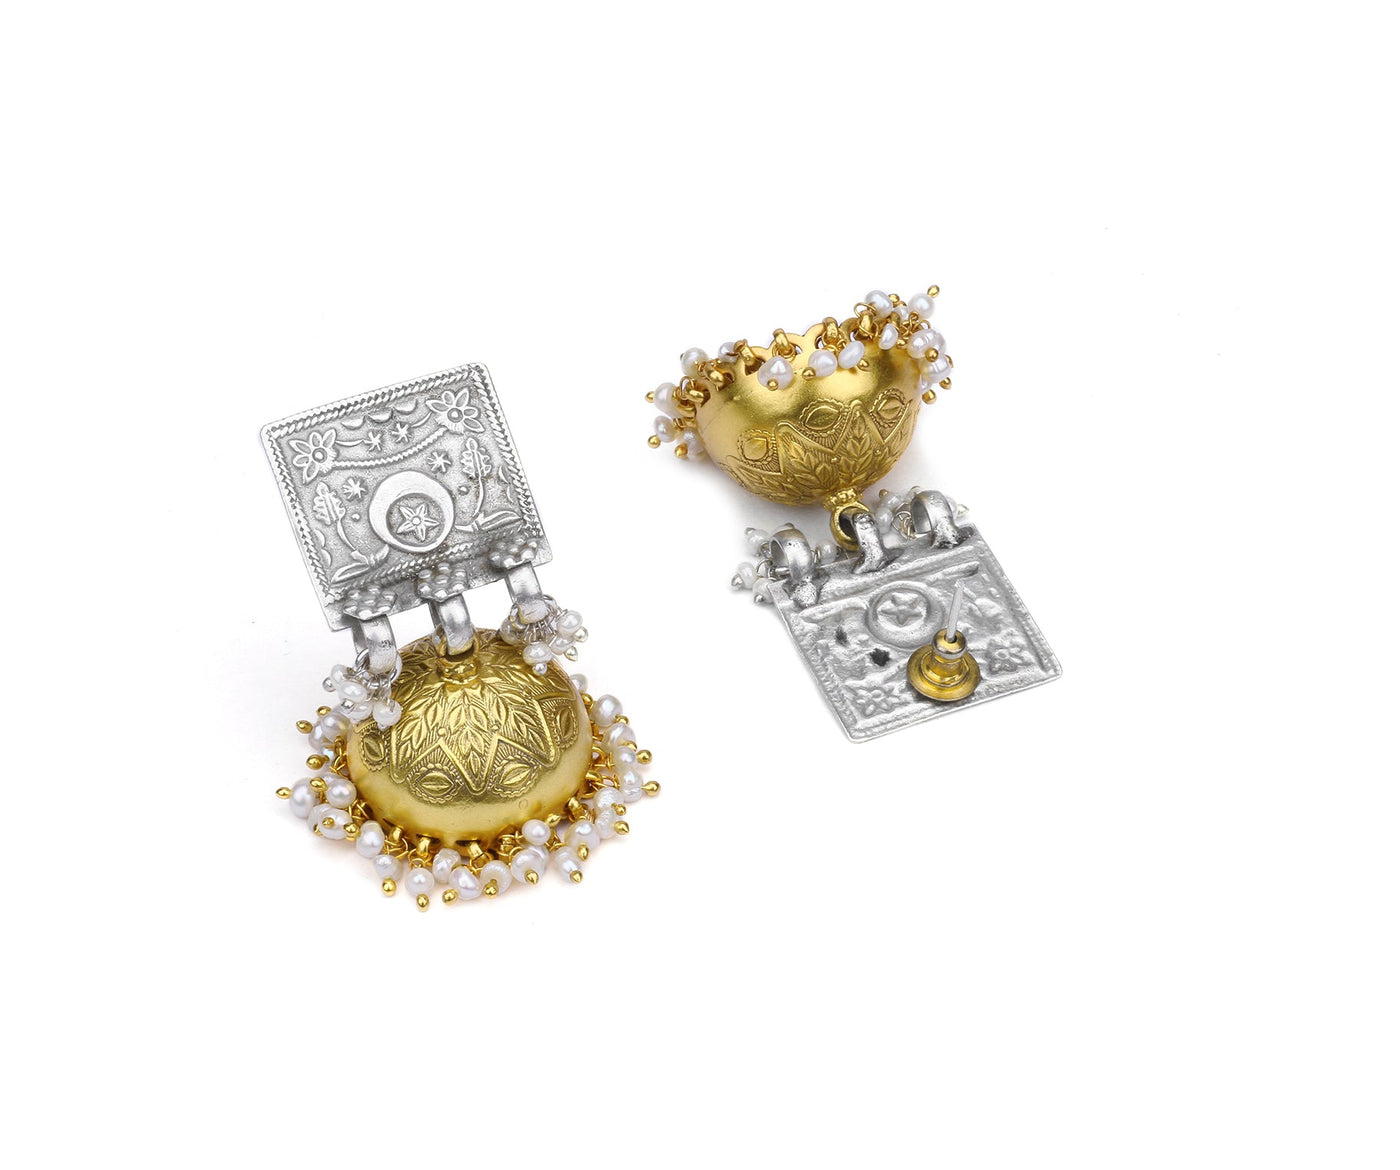 Amrita Rao in 24k Gold Plated Ring and Jhumkas-Earrings-Sangeeta Boochra